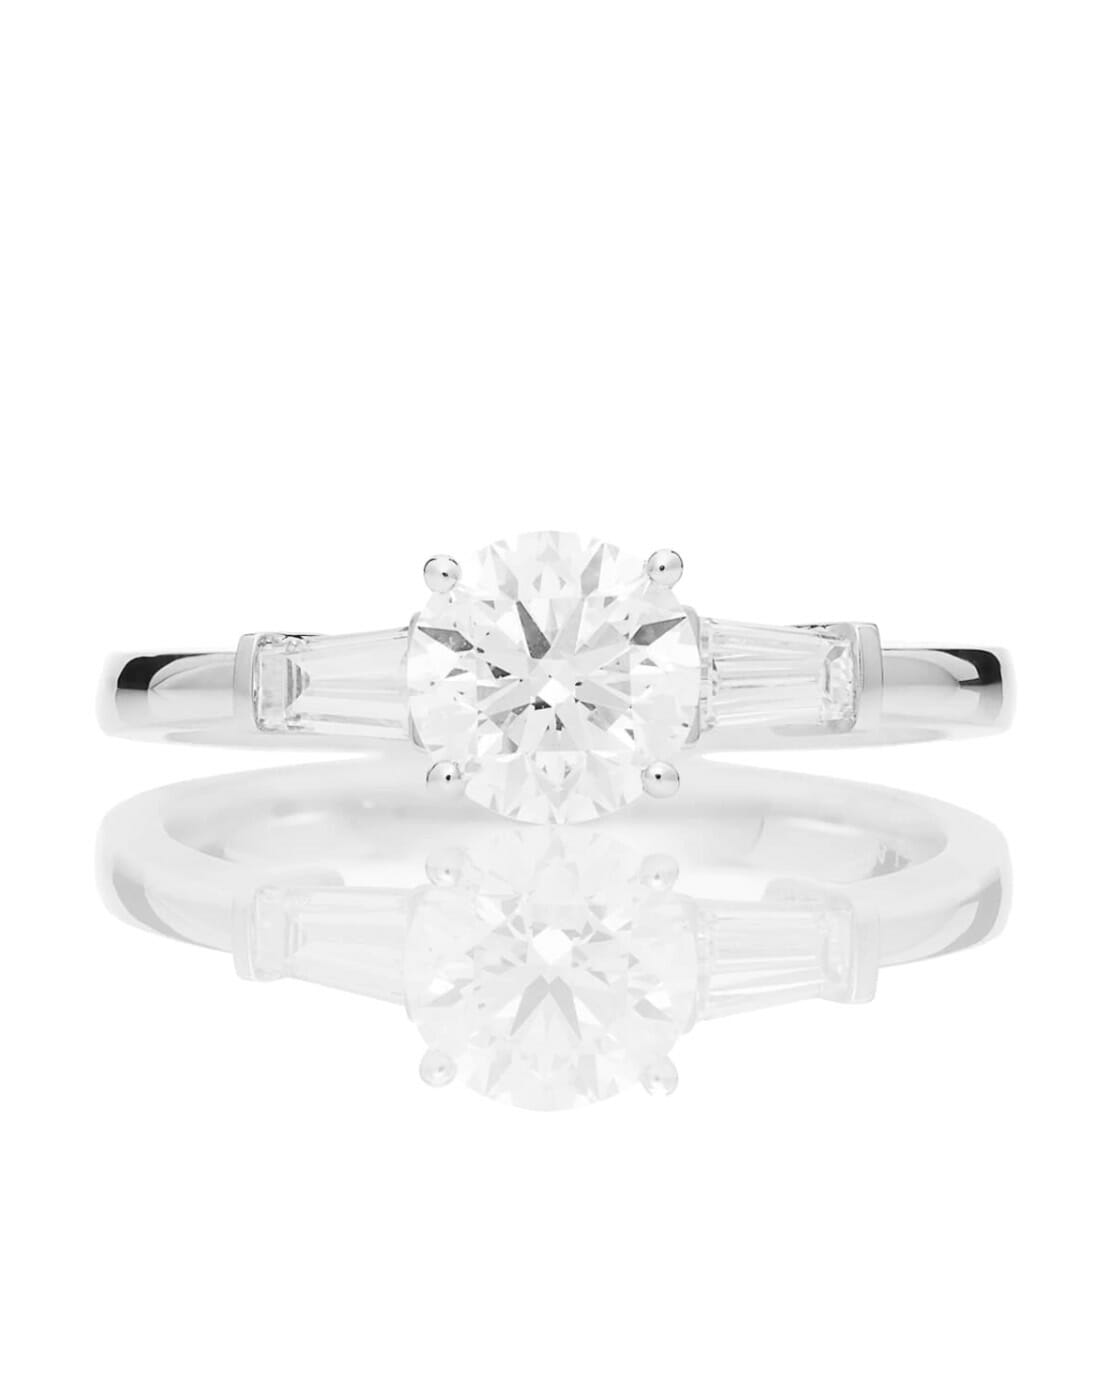 royal engagement rings diamonds wedding inspiration 